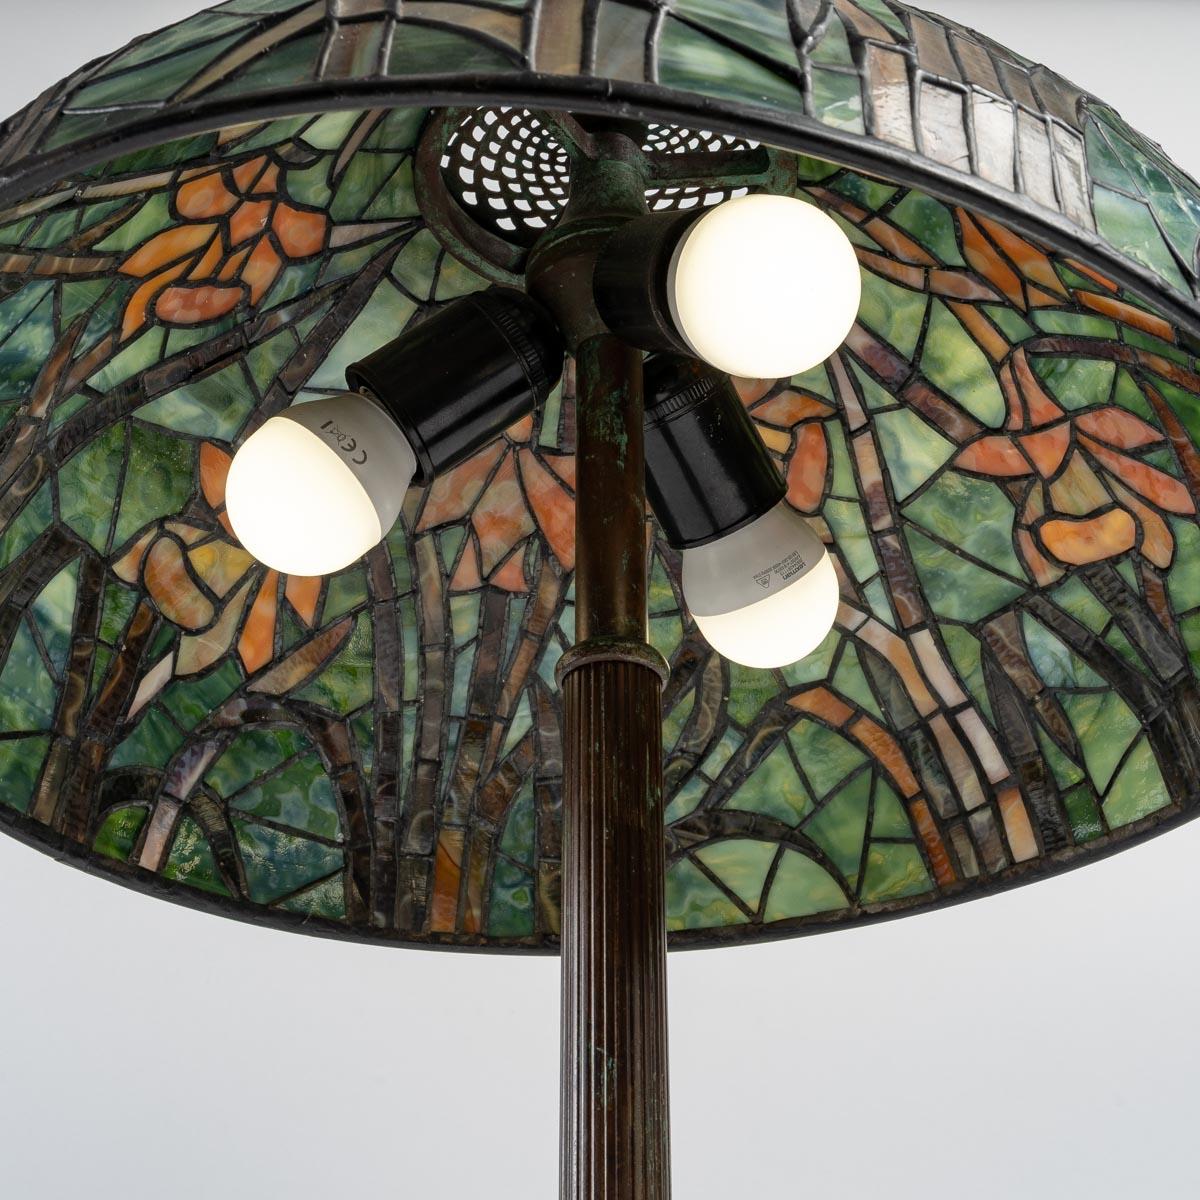 Art Nouveau Lamp in the Tiffany taste, 20th century